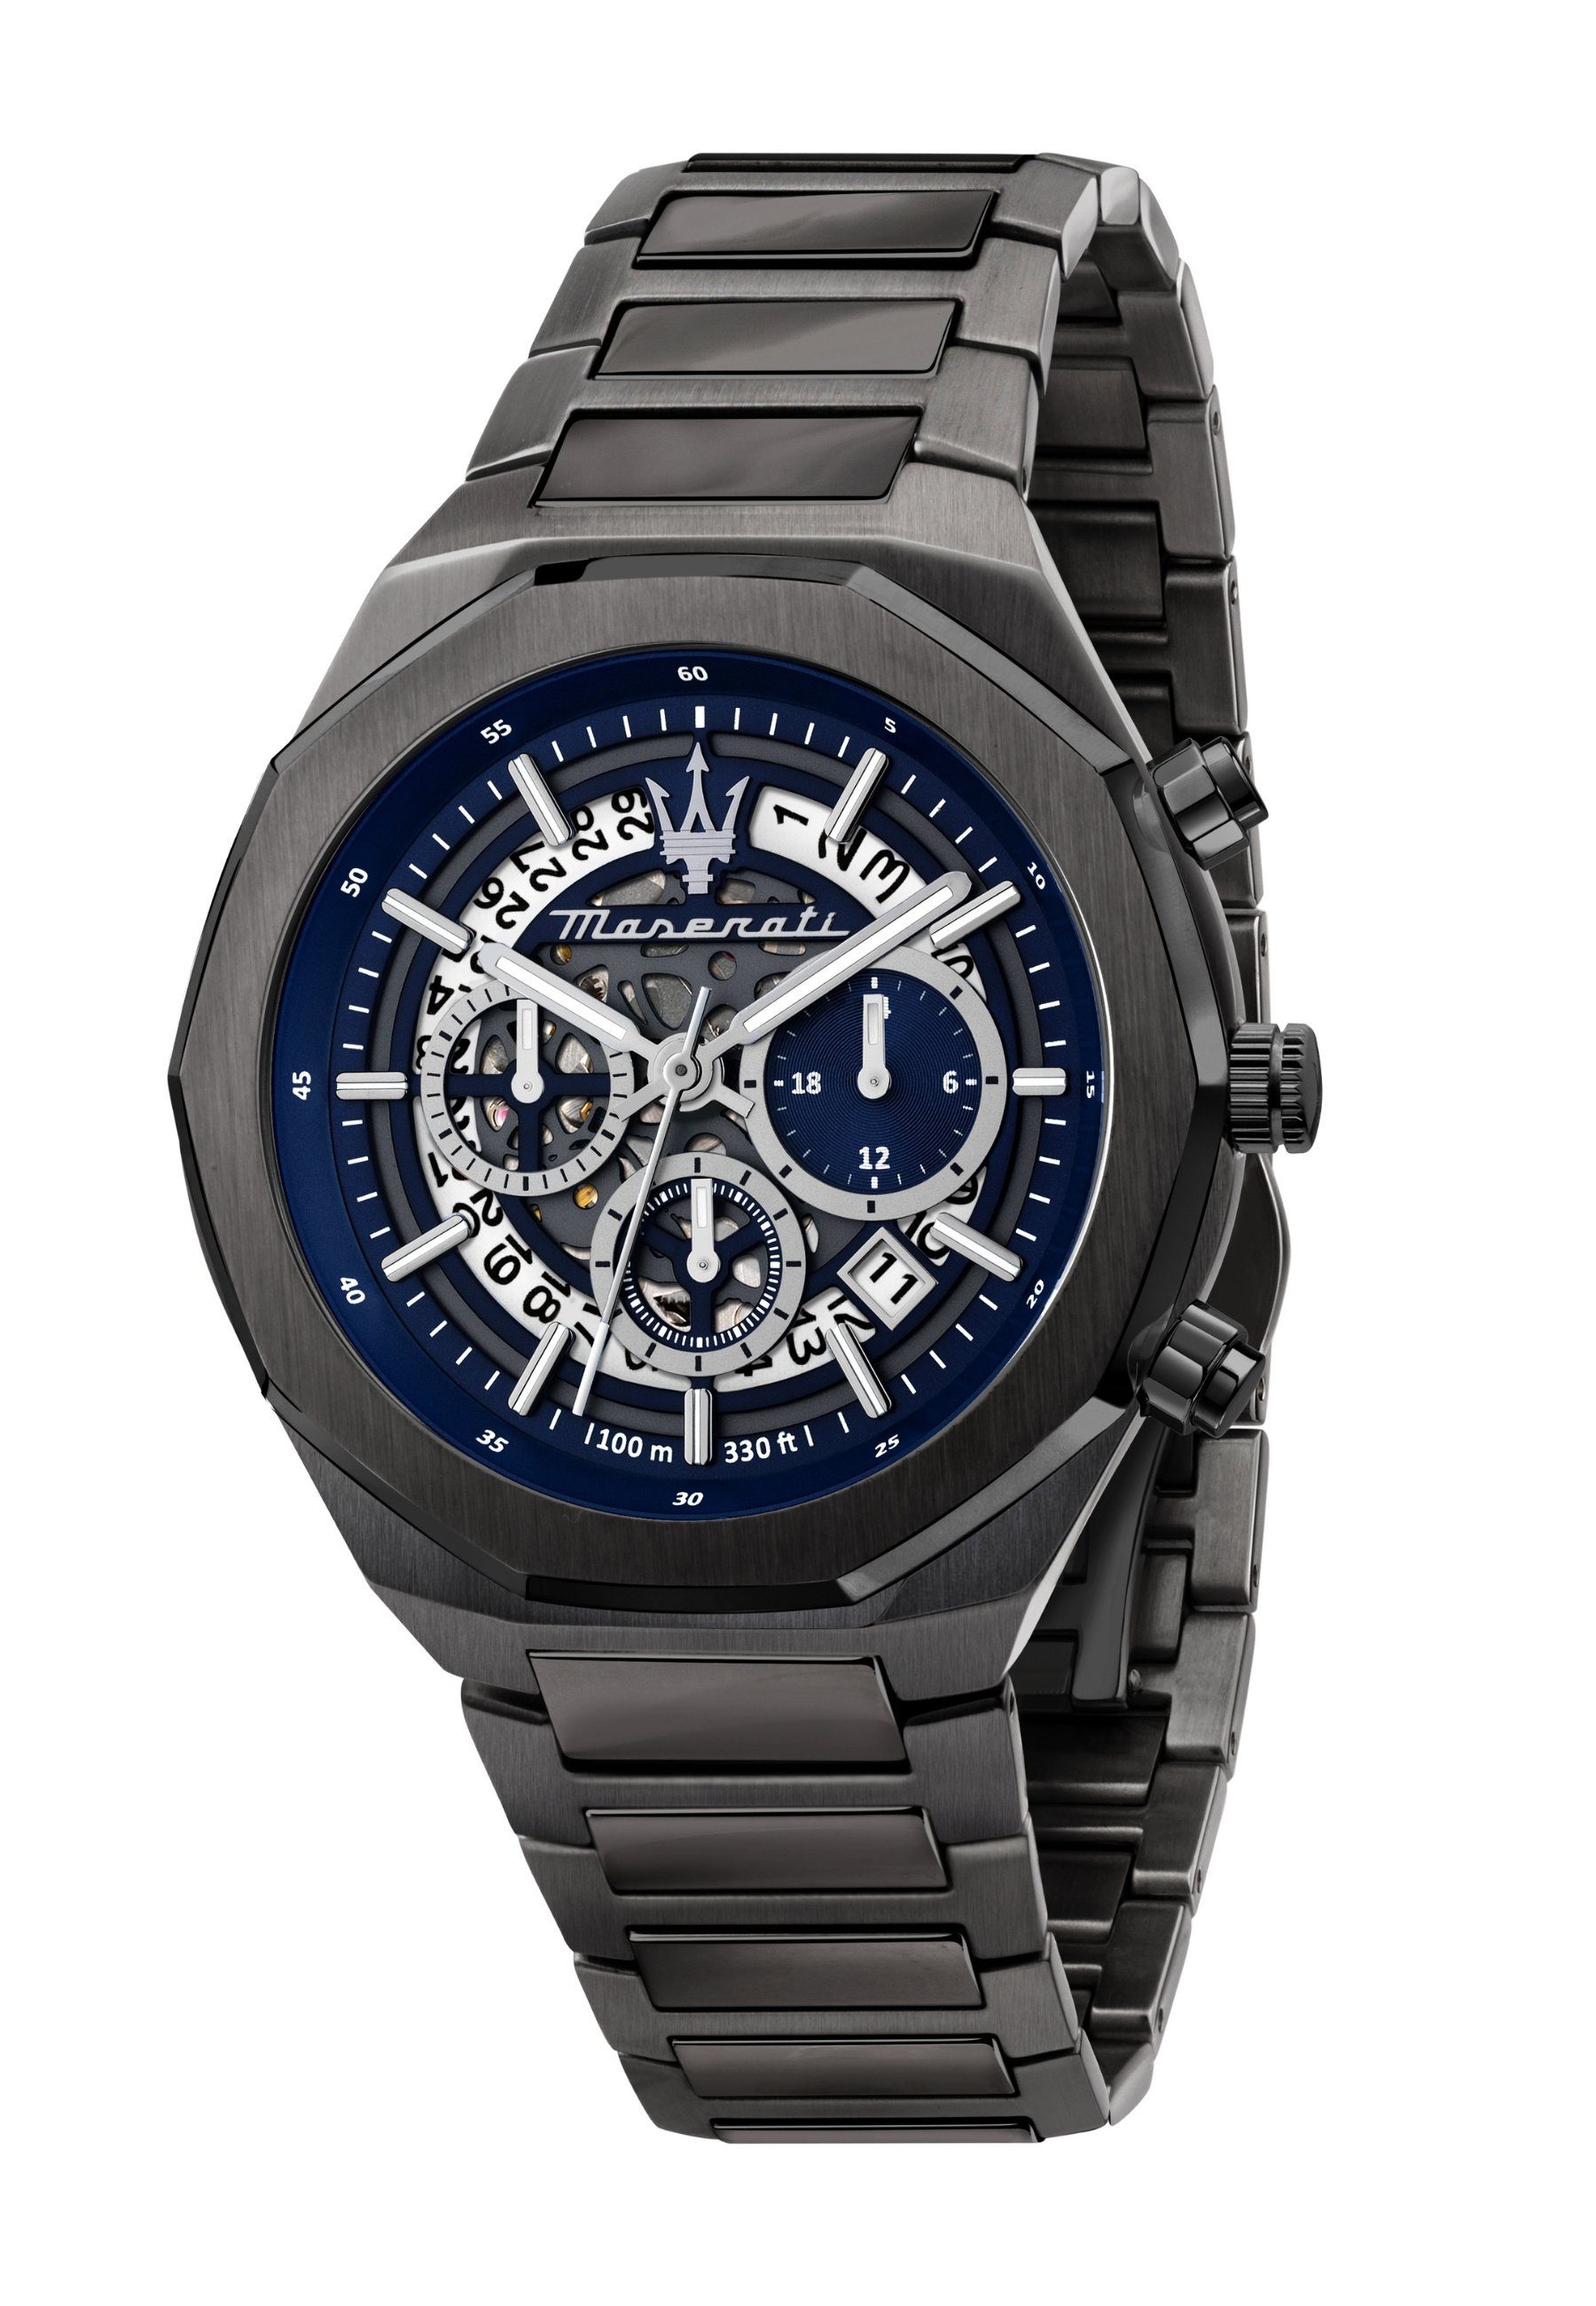 Maserati Time Chronograph Stile, mit modernem Design, Das hochwertige  Armband aus Edelstahl ist besonders angenehm